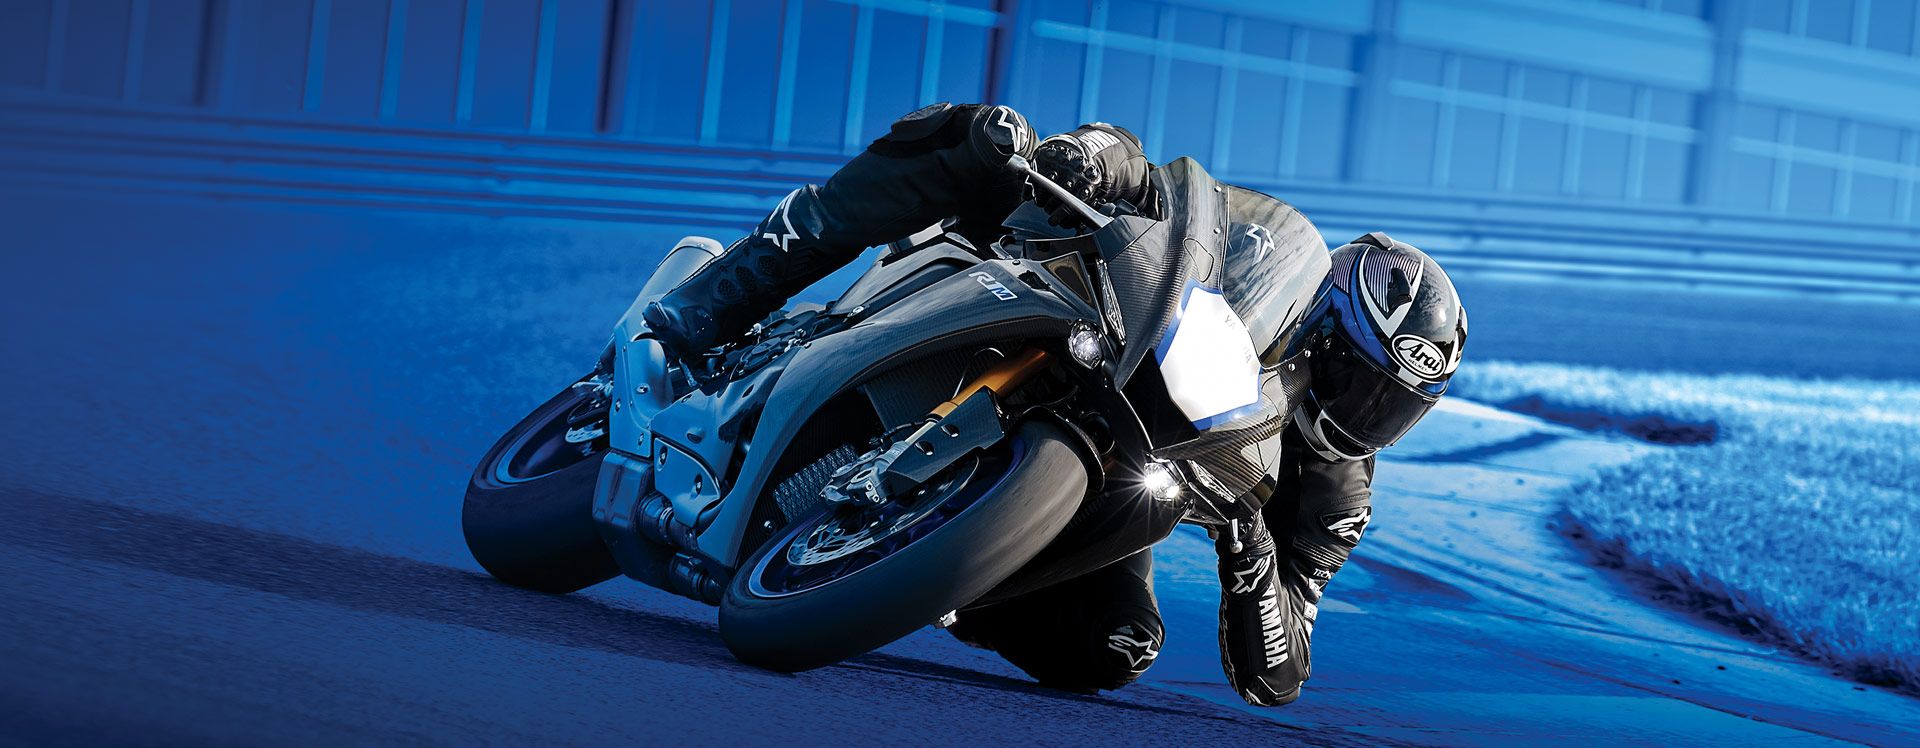 Yamaha YZF R1M Supersport Motorcycle